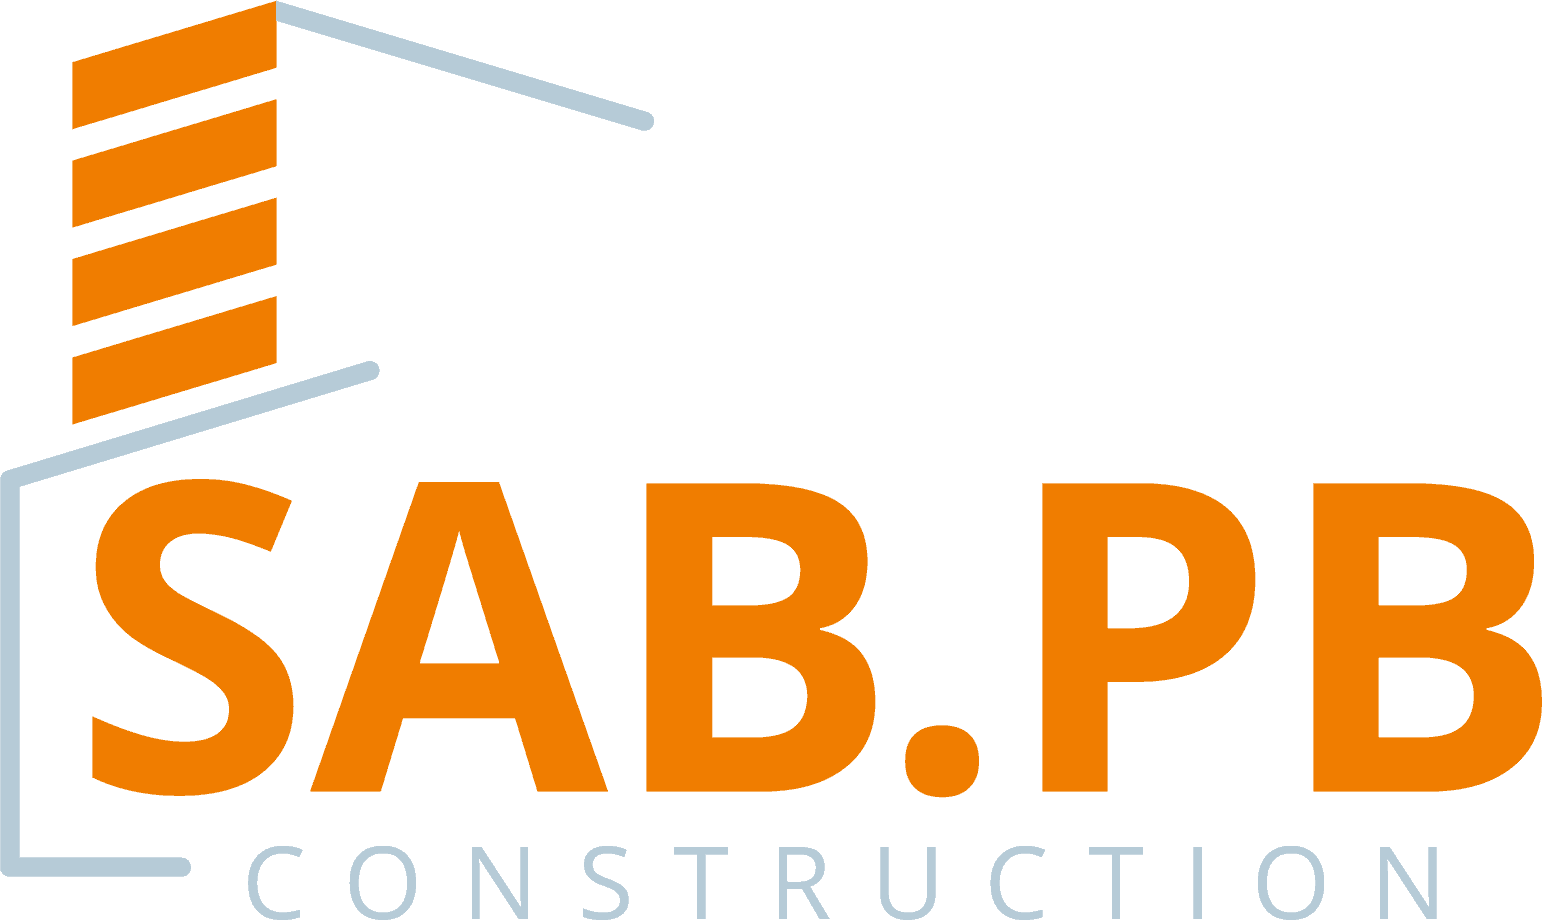 SAB.PB Construction LTD